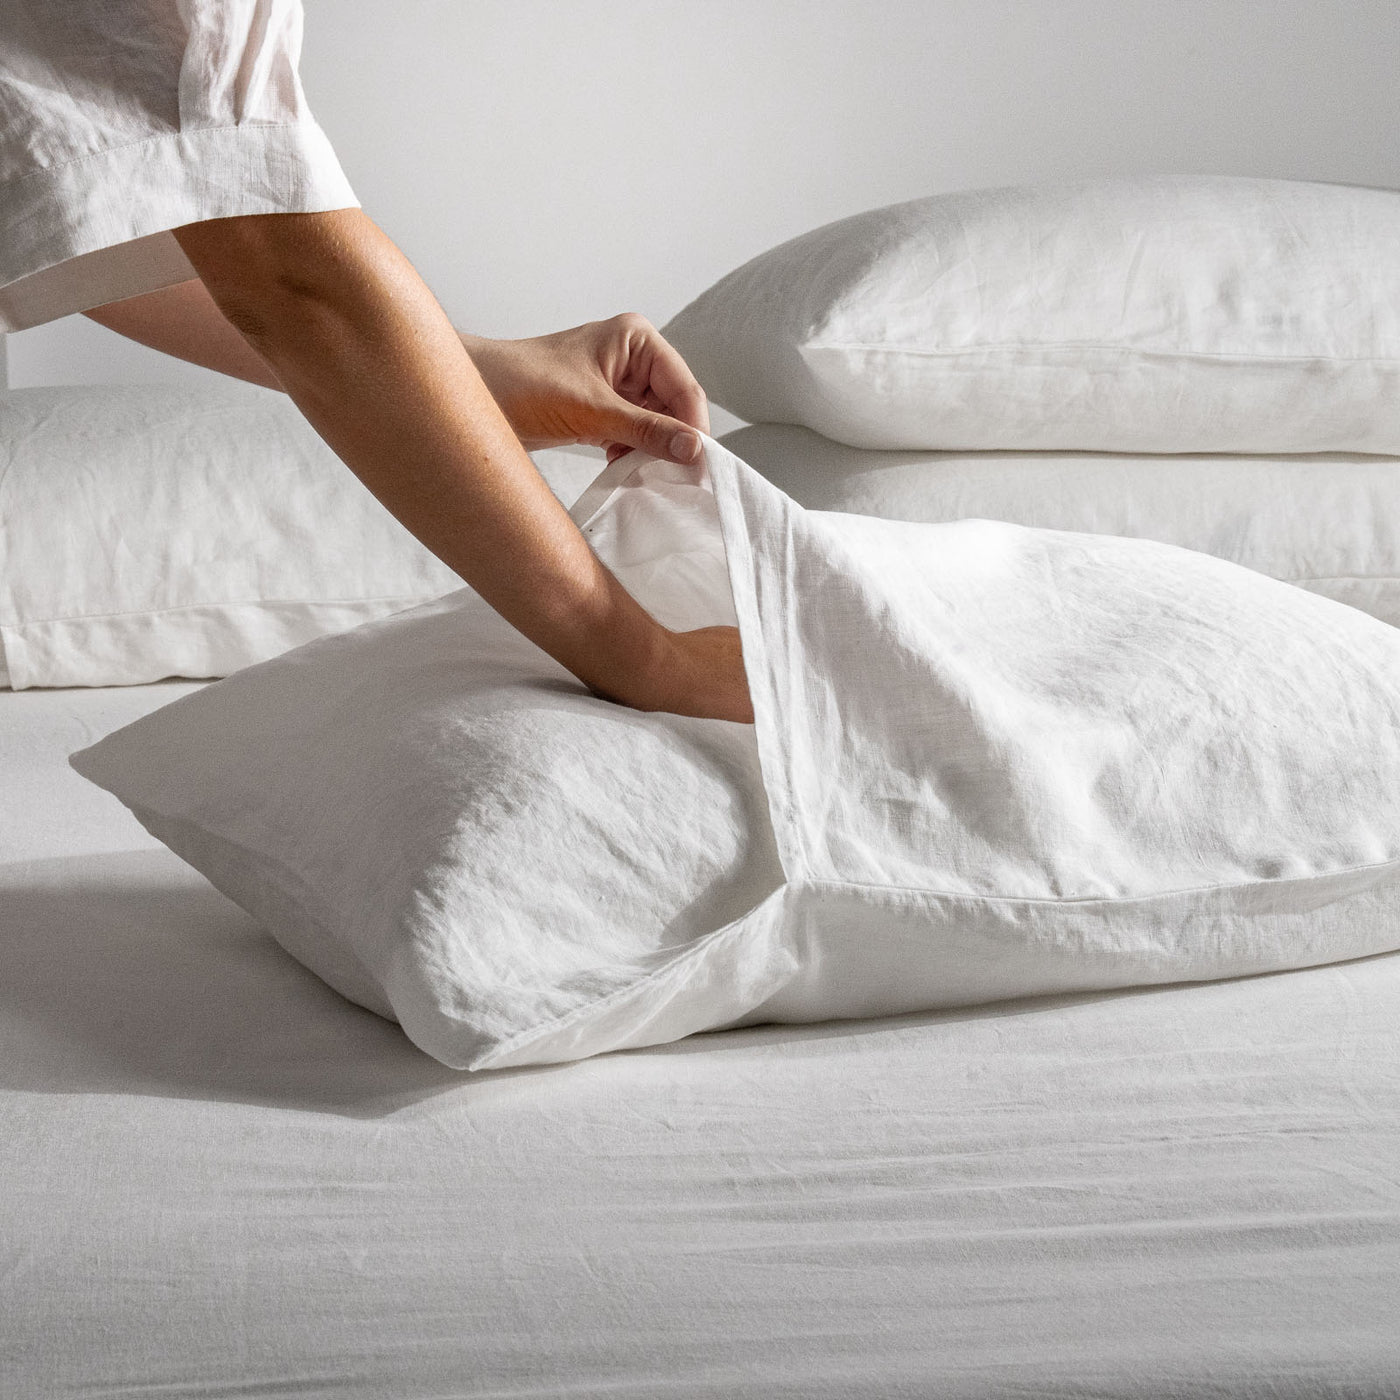 French Flax Linen Pillowcase Set in White